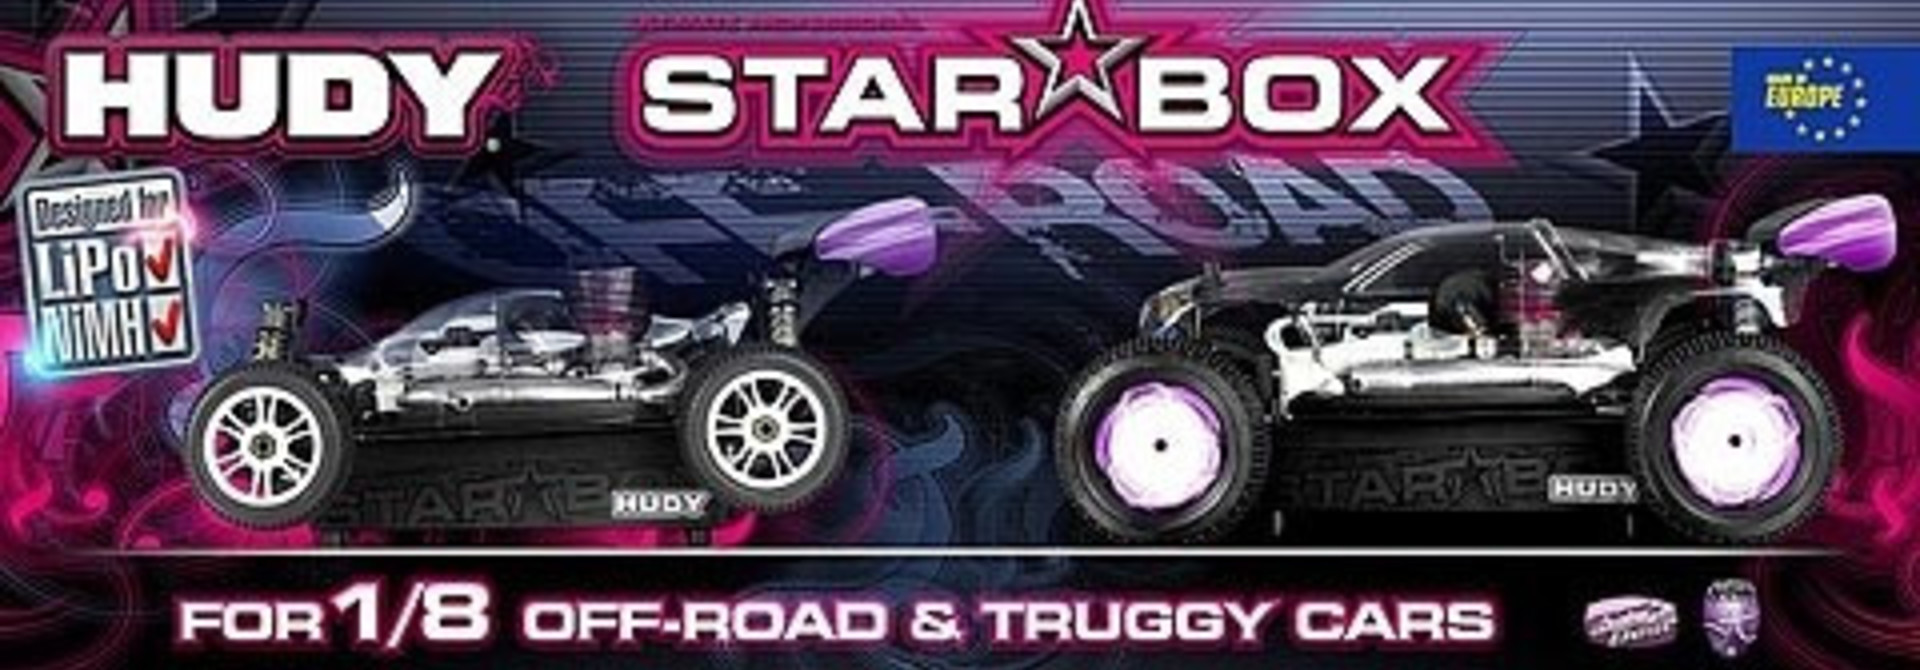 Hudy Star-Box Truggy & Off-Road 1/8. H104500